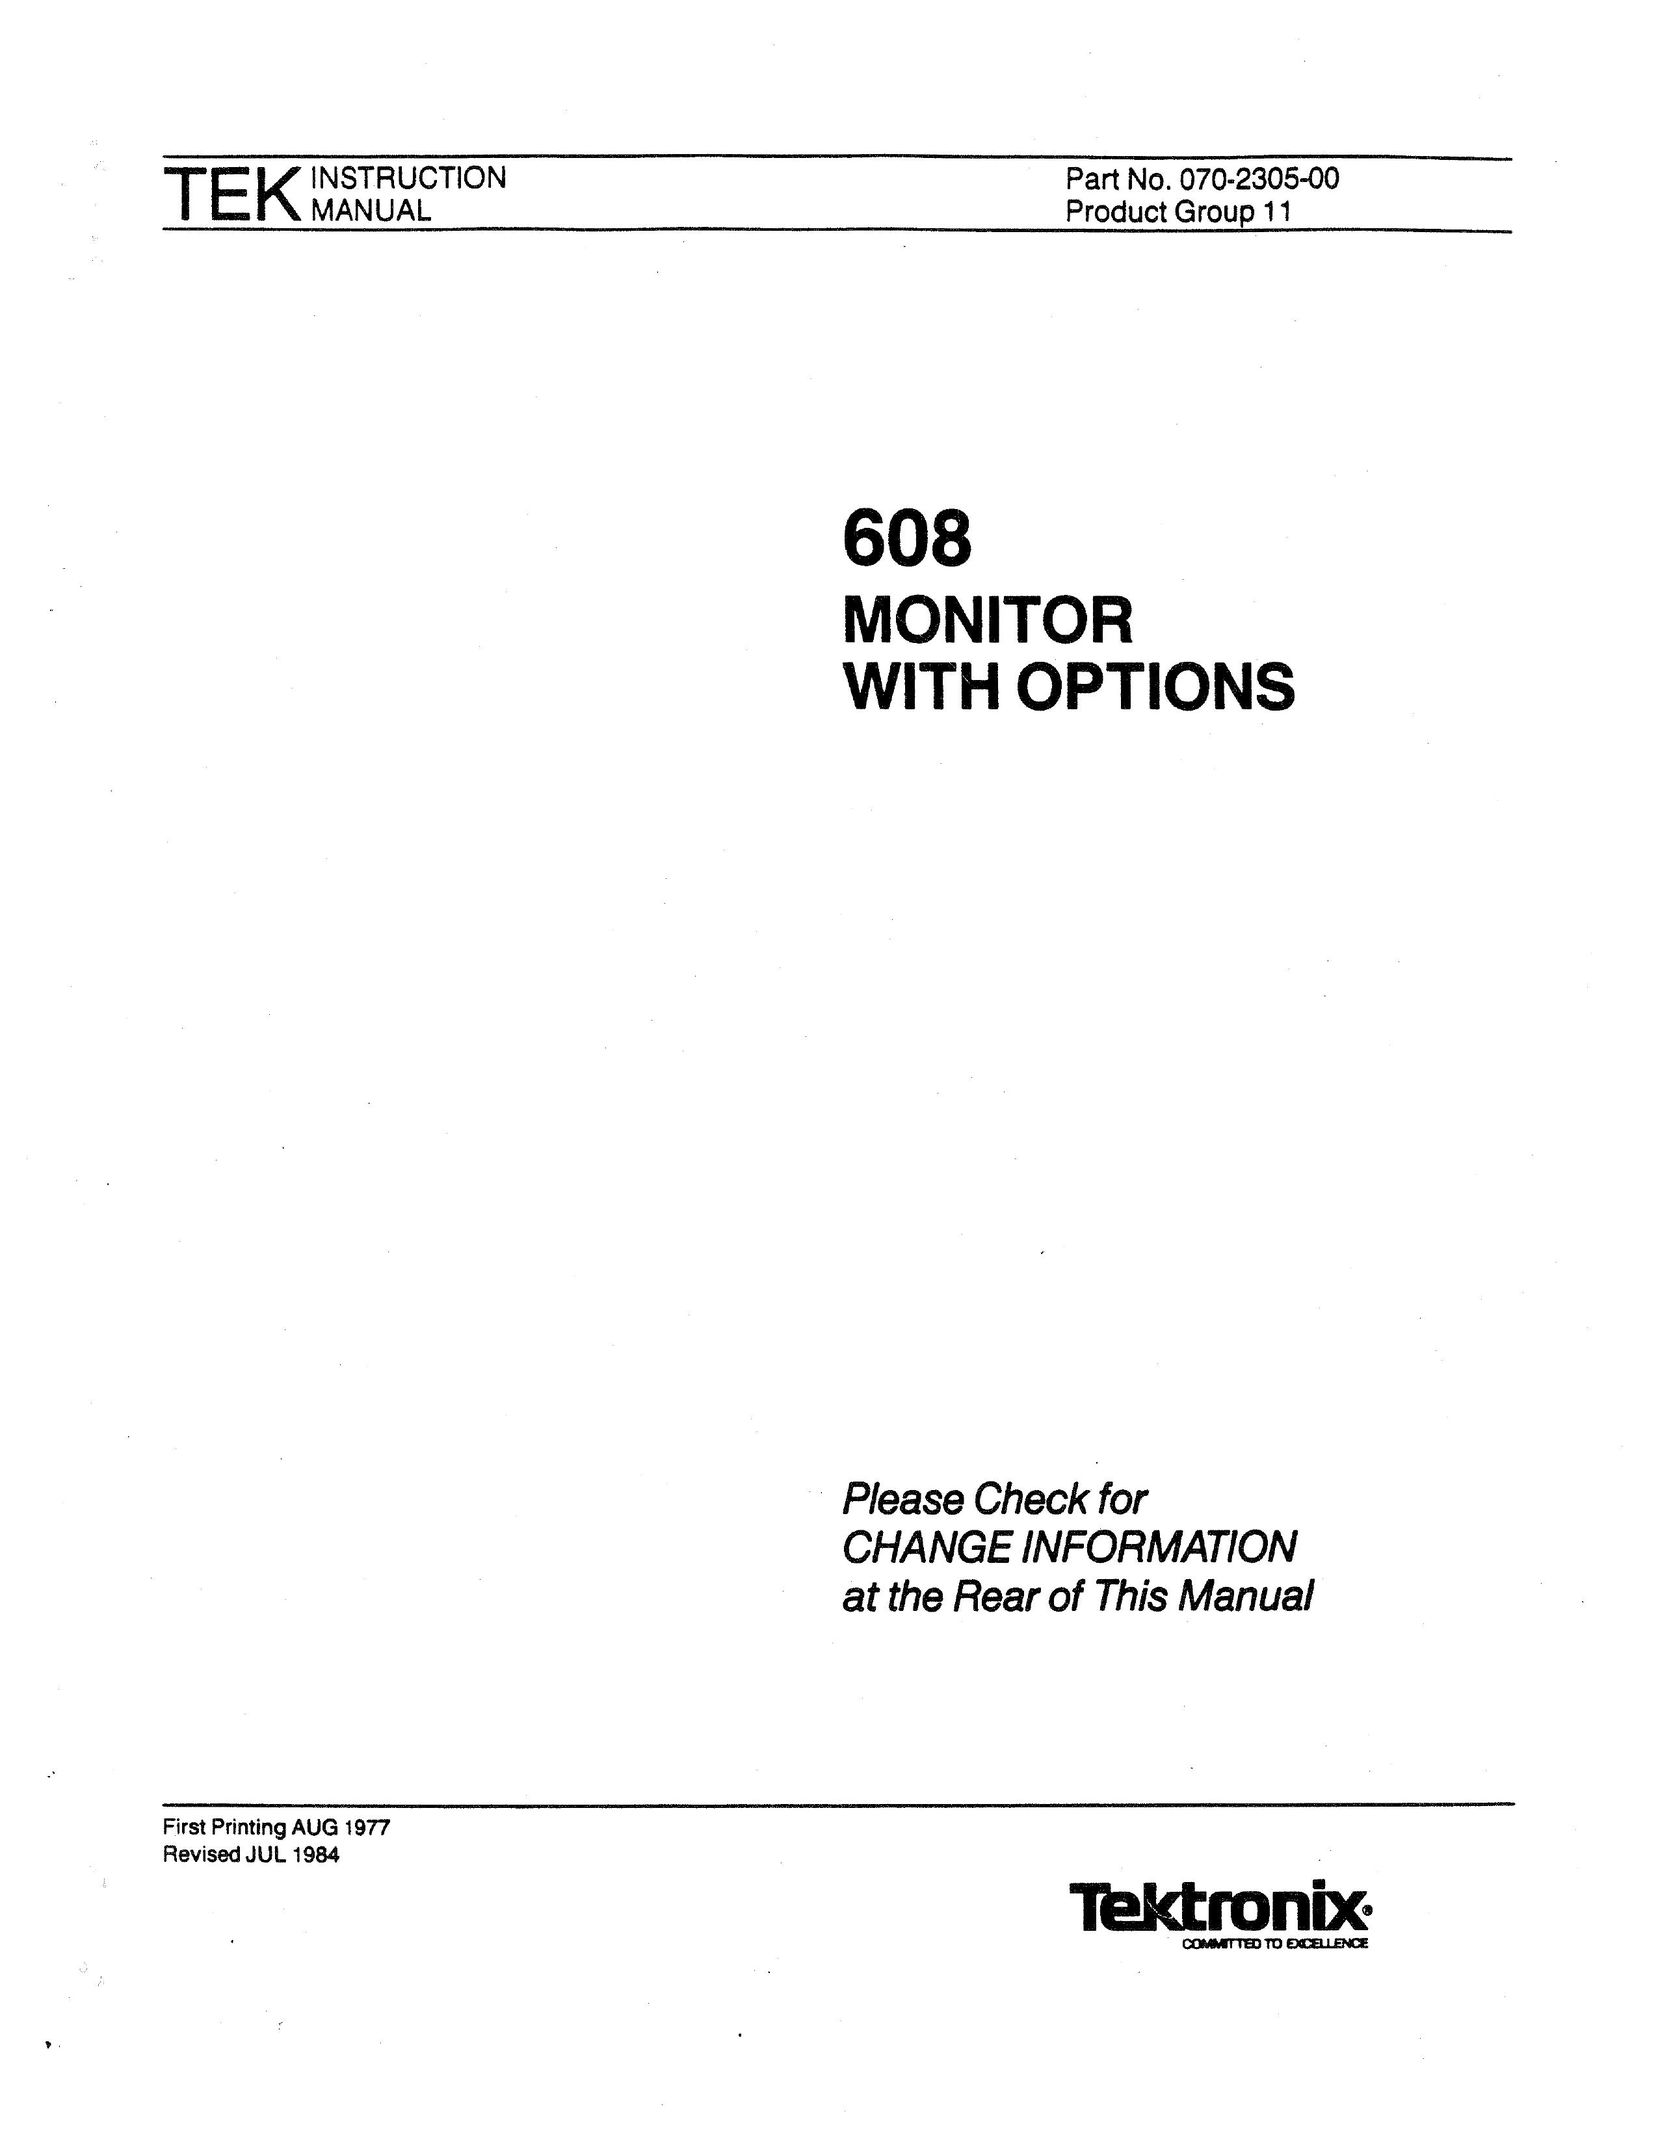 Tektronix 608 Computer Monitor User Manual